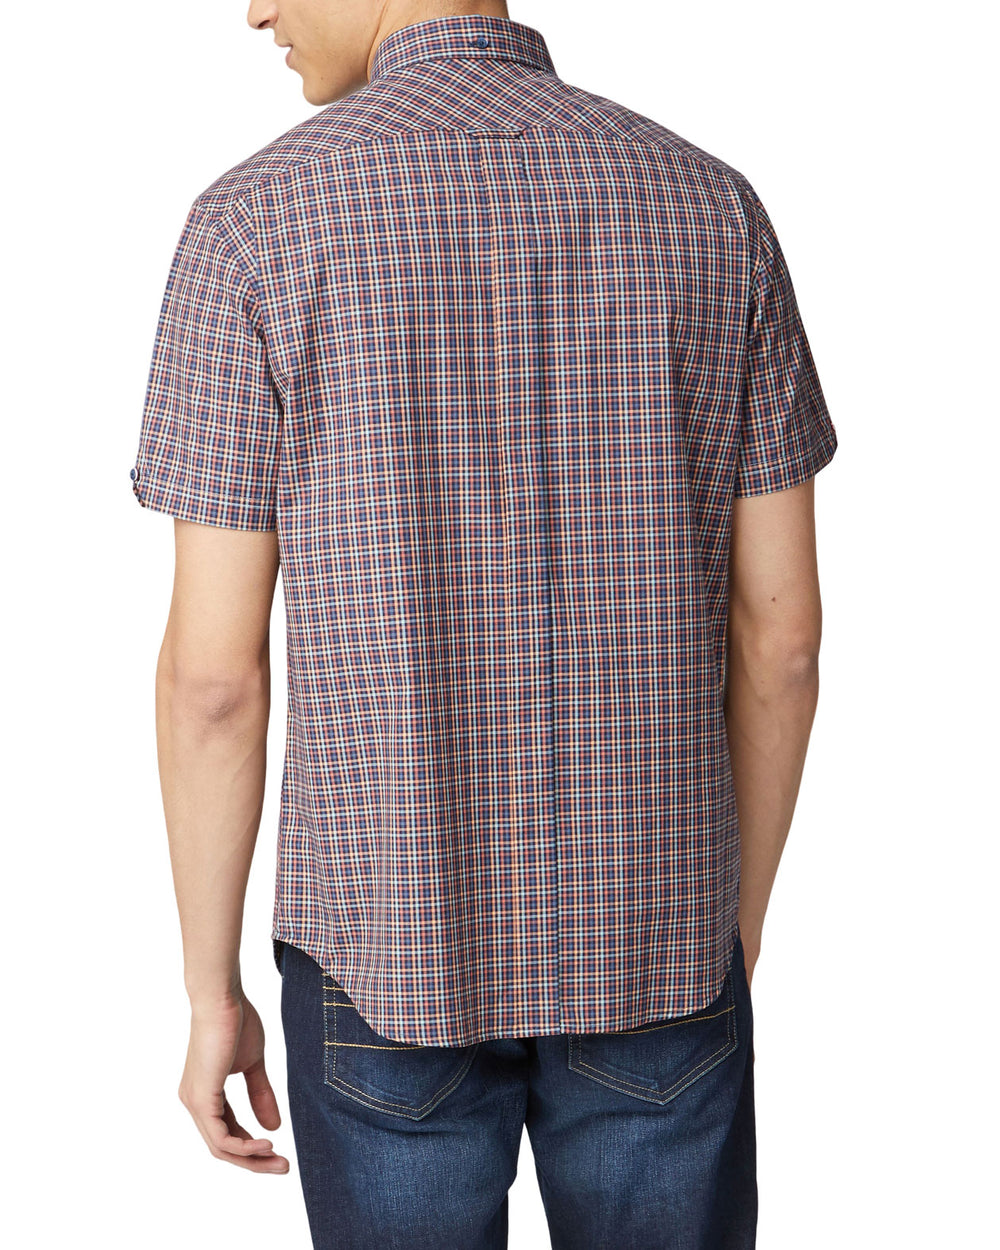 Short-Sleeve Mini Gingham Shirt - Peach